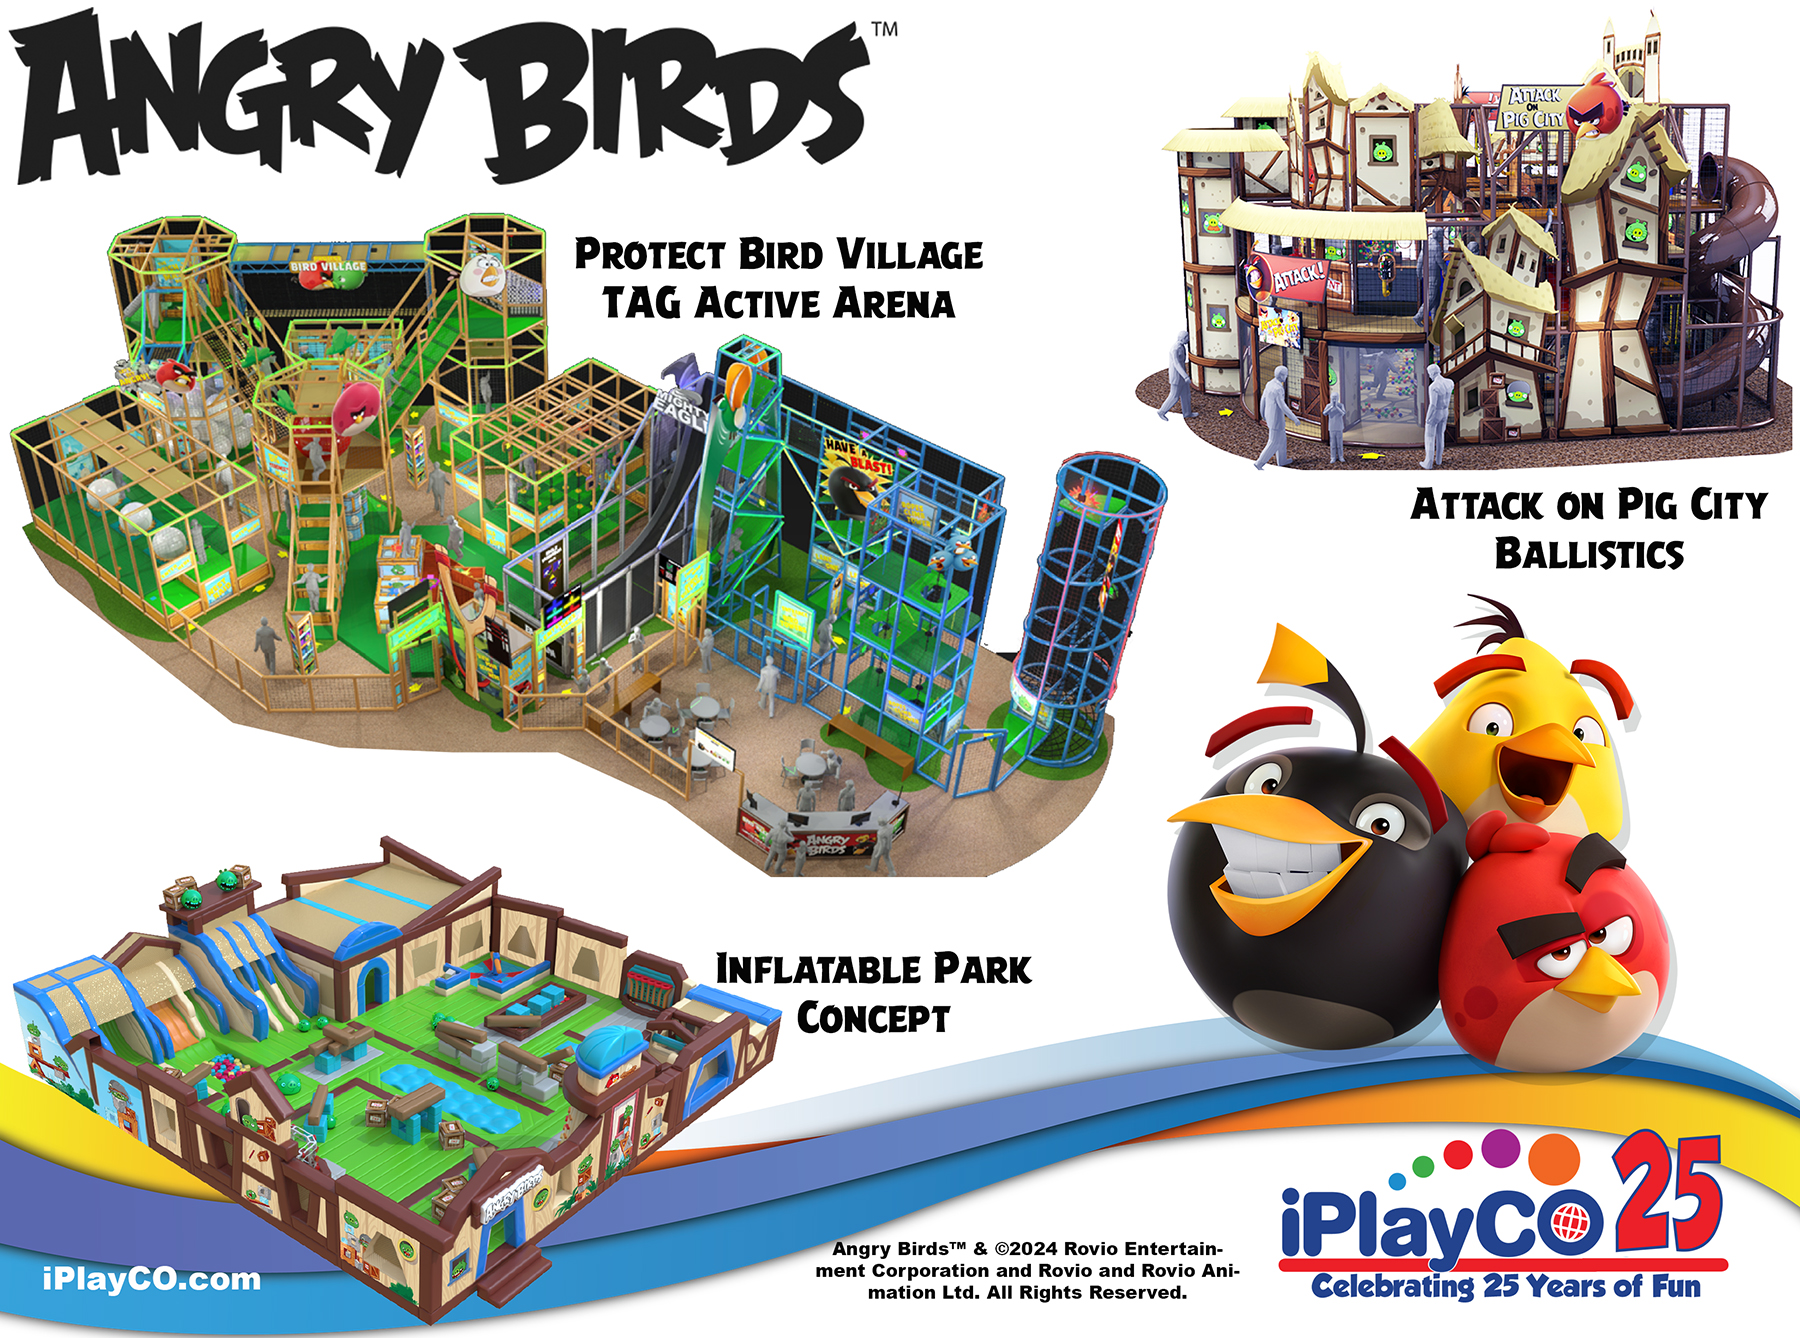 Angry birds, iplayco, interactive play, indoor playgroundsd